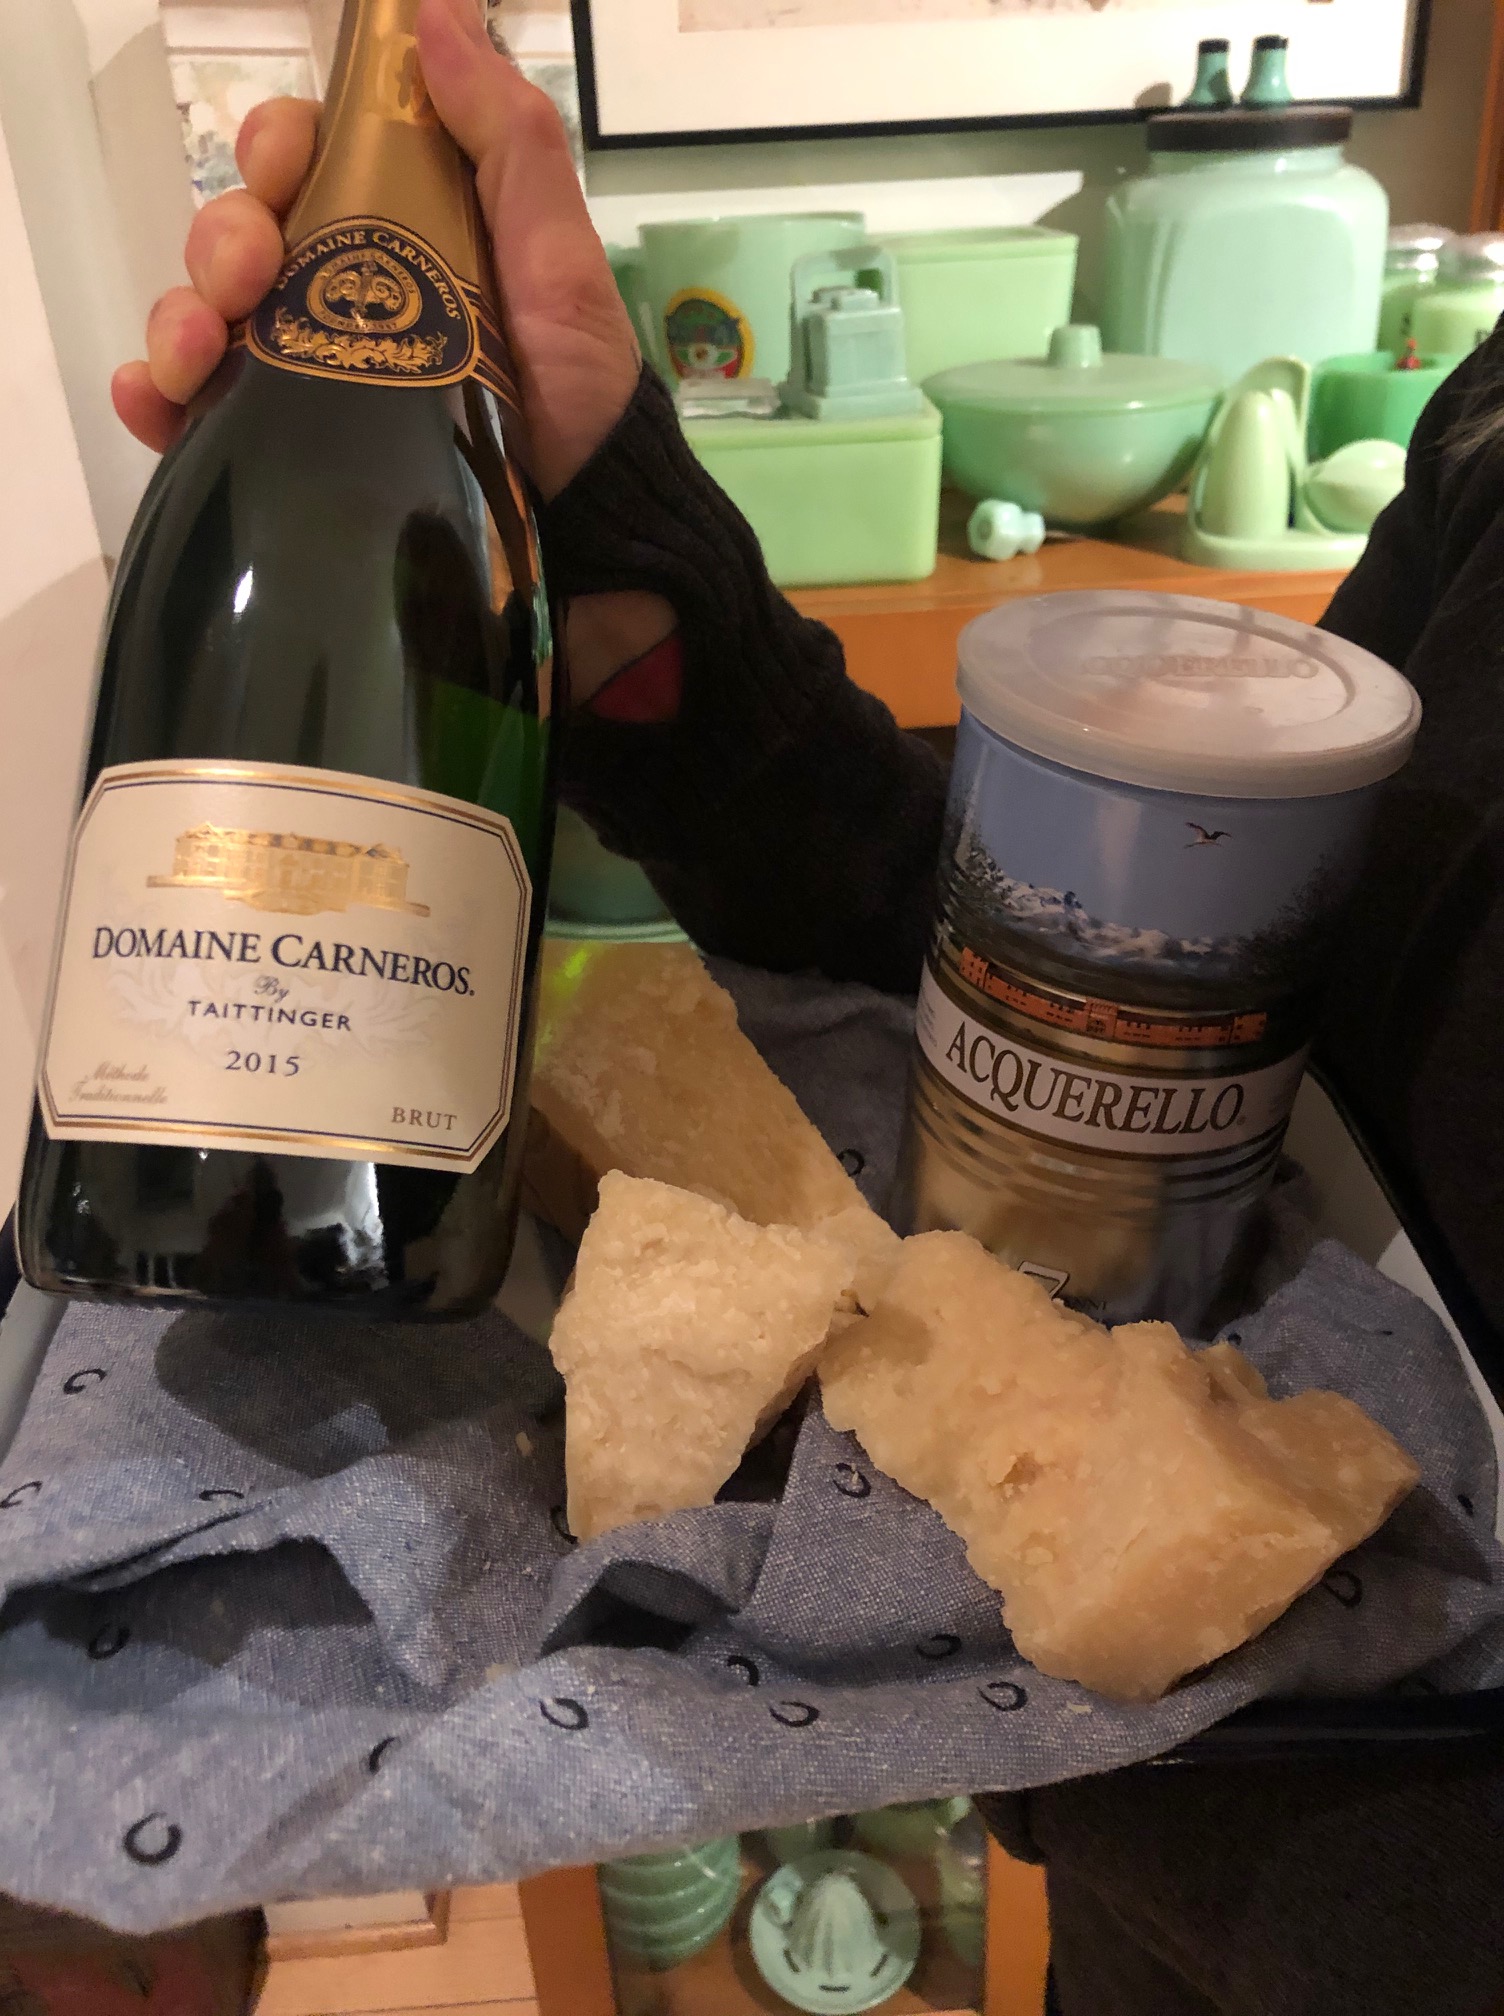 Domaine Carneros champagne with Parmigiano Reggiano